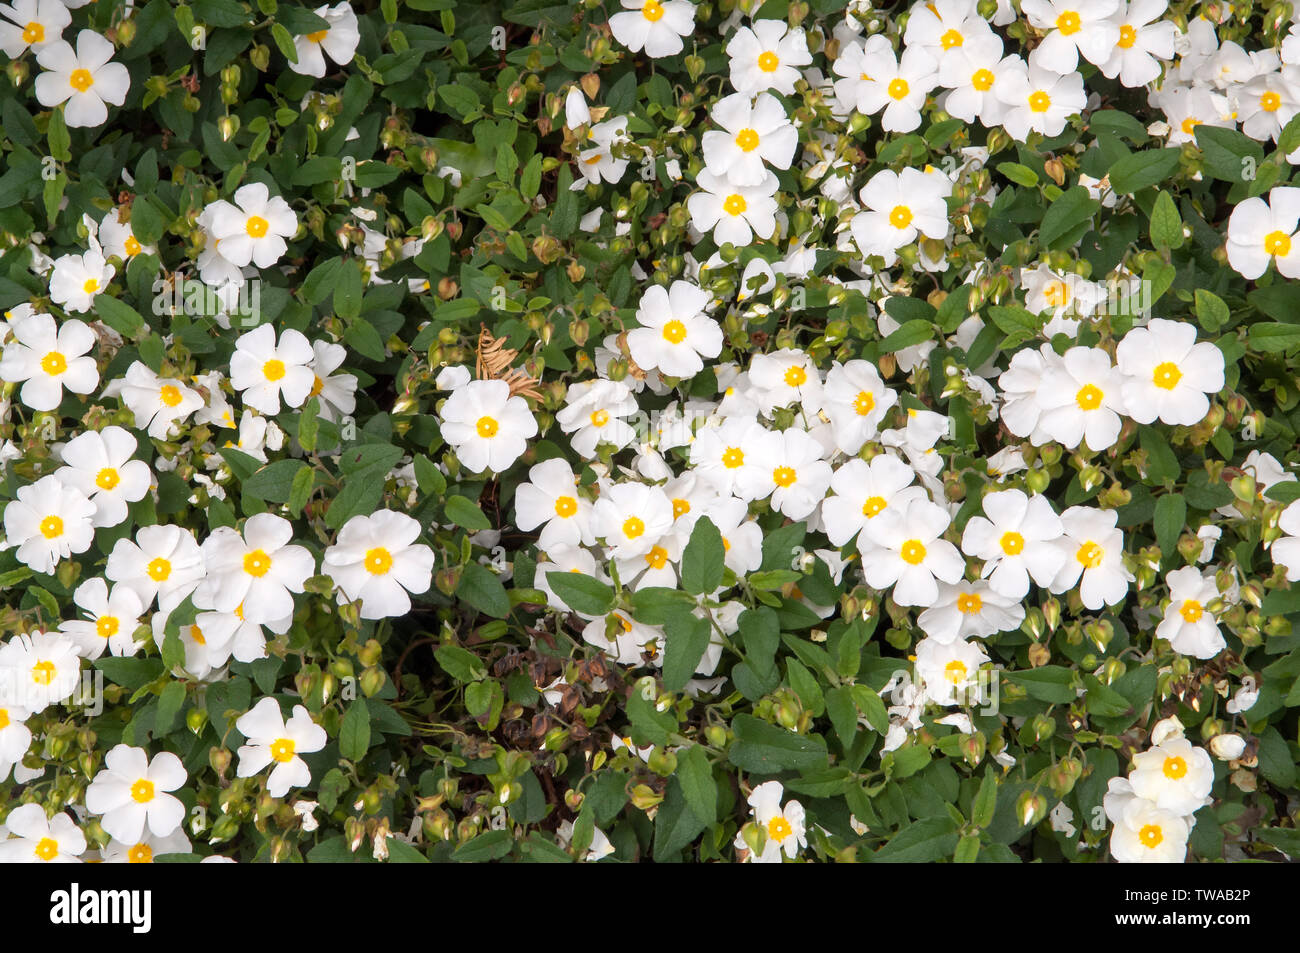 Cistus hybridus (cistus corbariensis), also known as little miss sunshine, has white flowers with yellow centres. Stock Photo